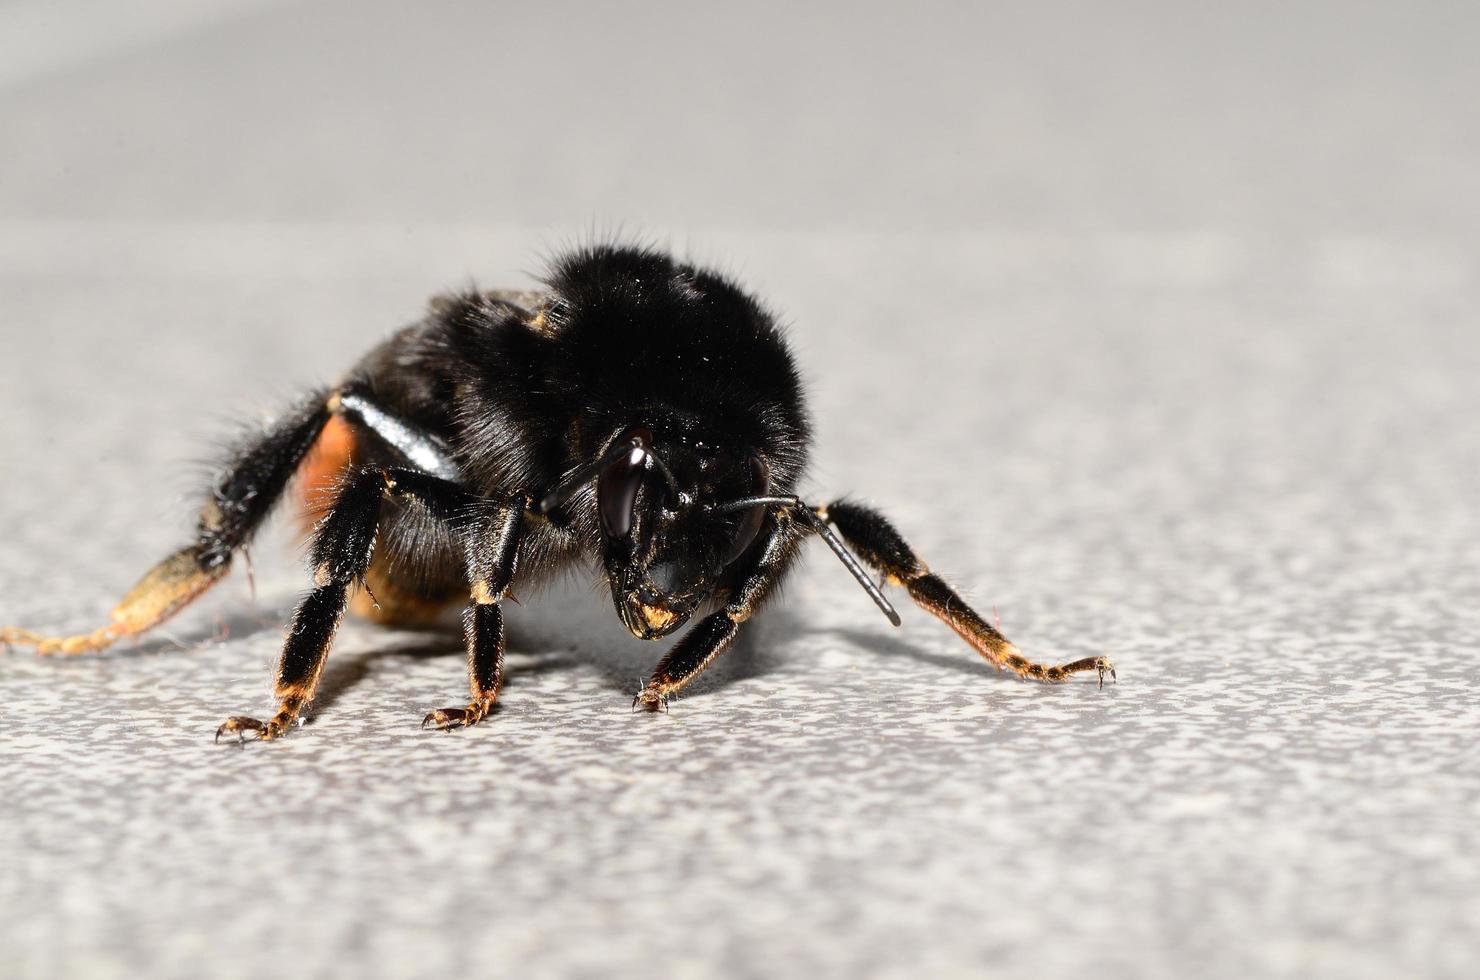 bumblebee on floor photo